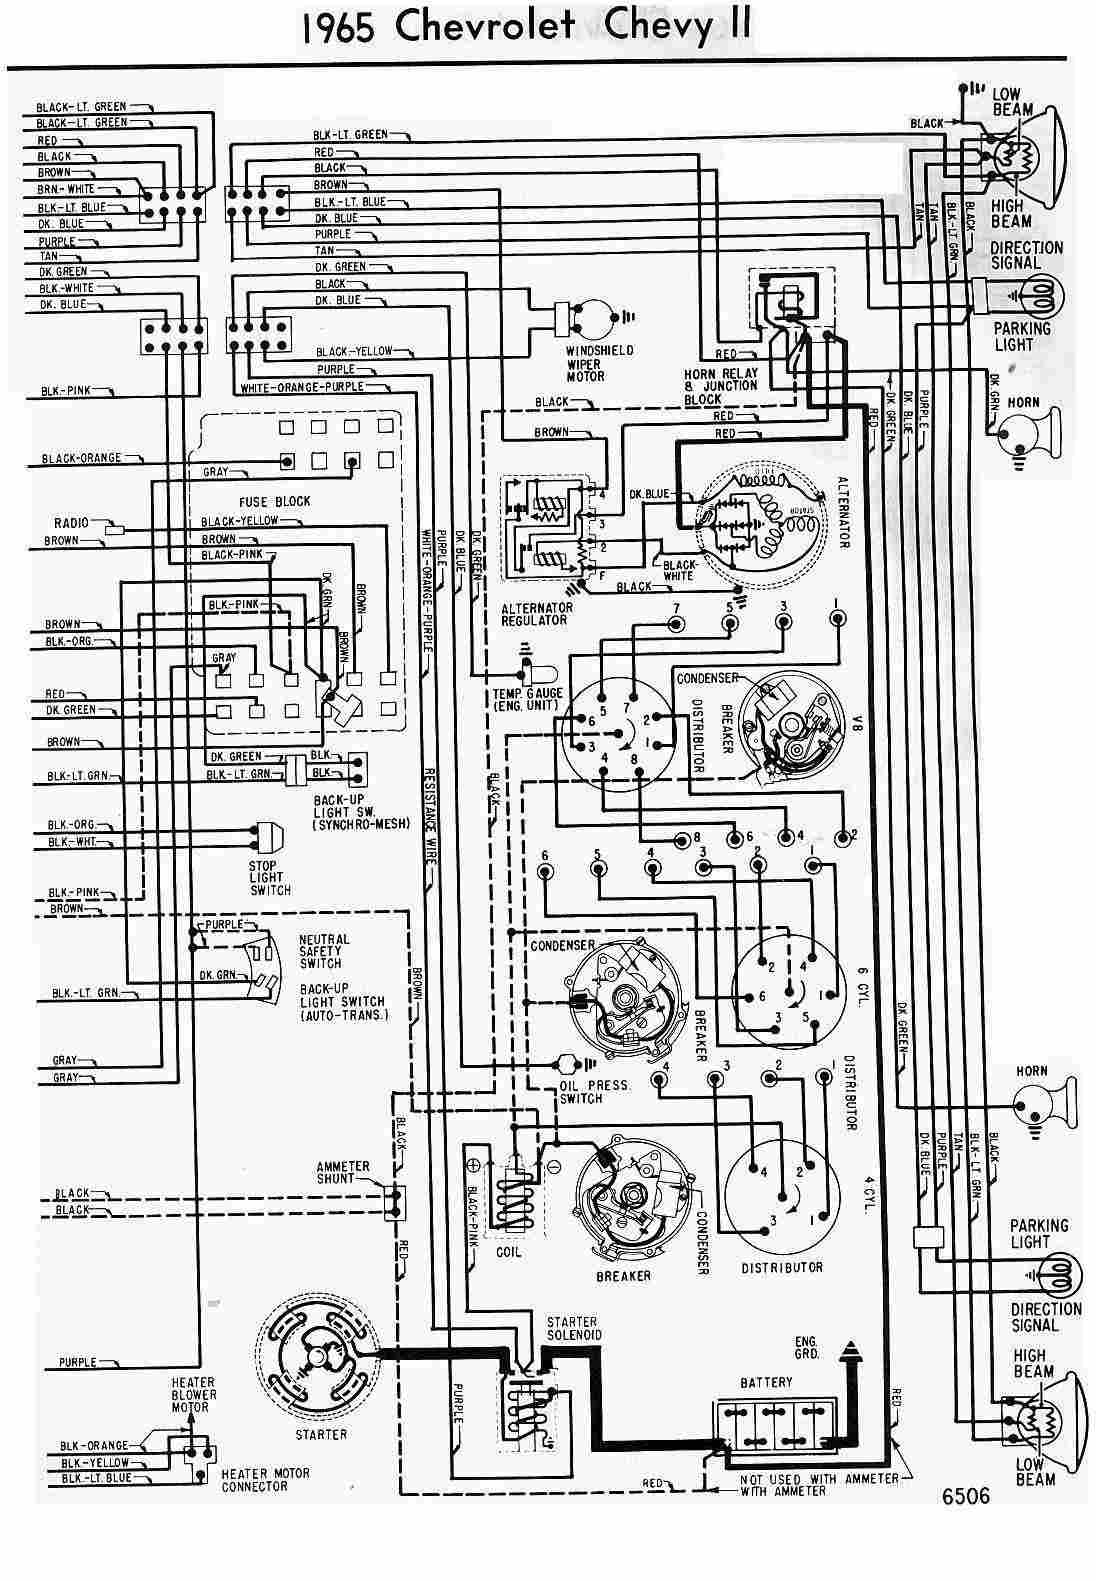 Wiring Harnes For 1965 Chevy Impala - Wiring Diagram Schemas